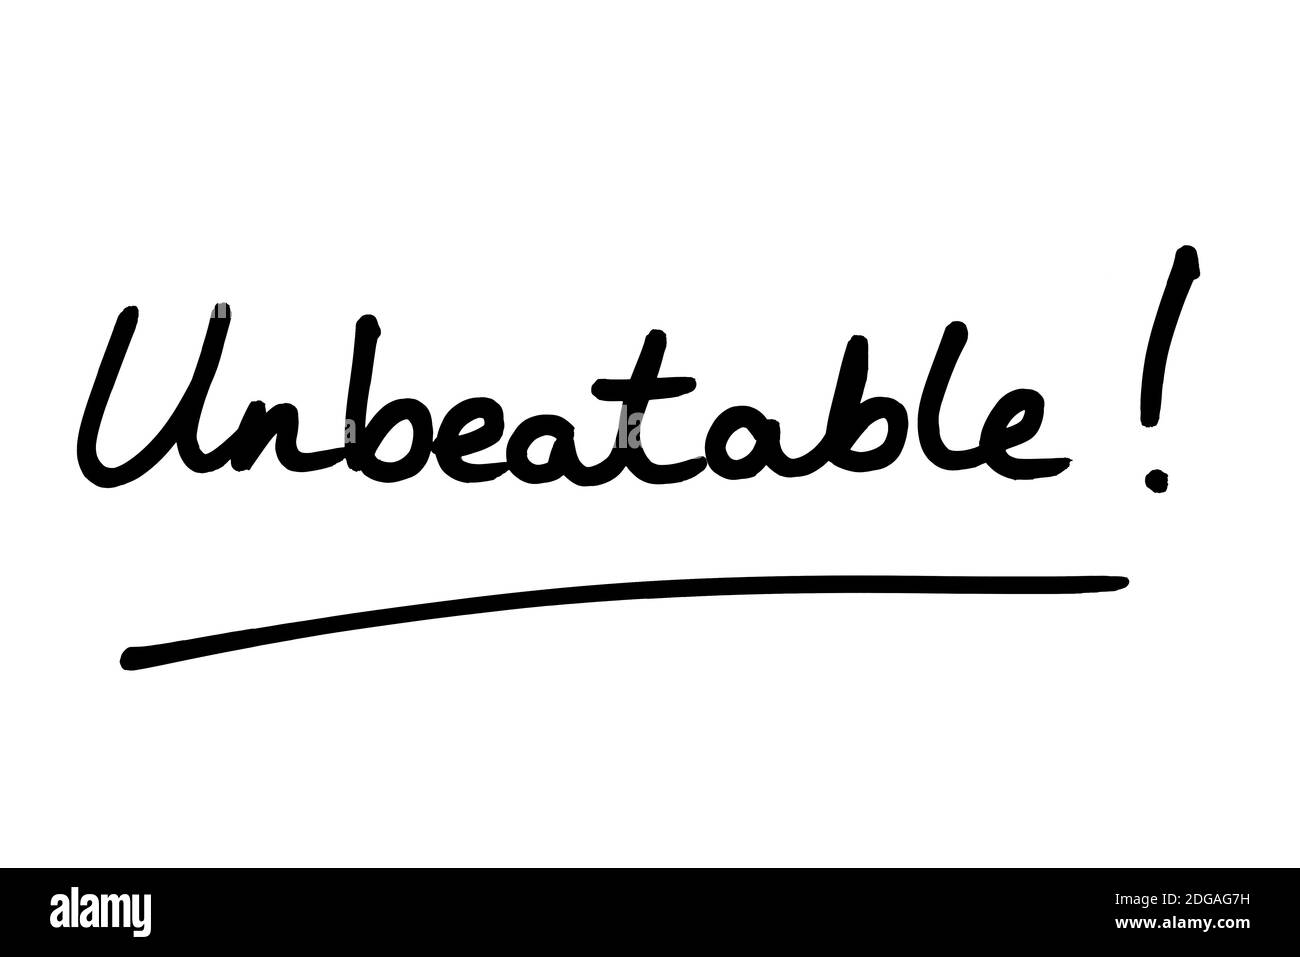 Unbeatable! handwritten on a white background. Stock Photo